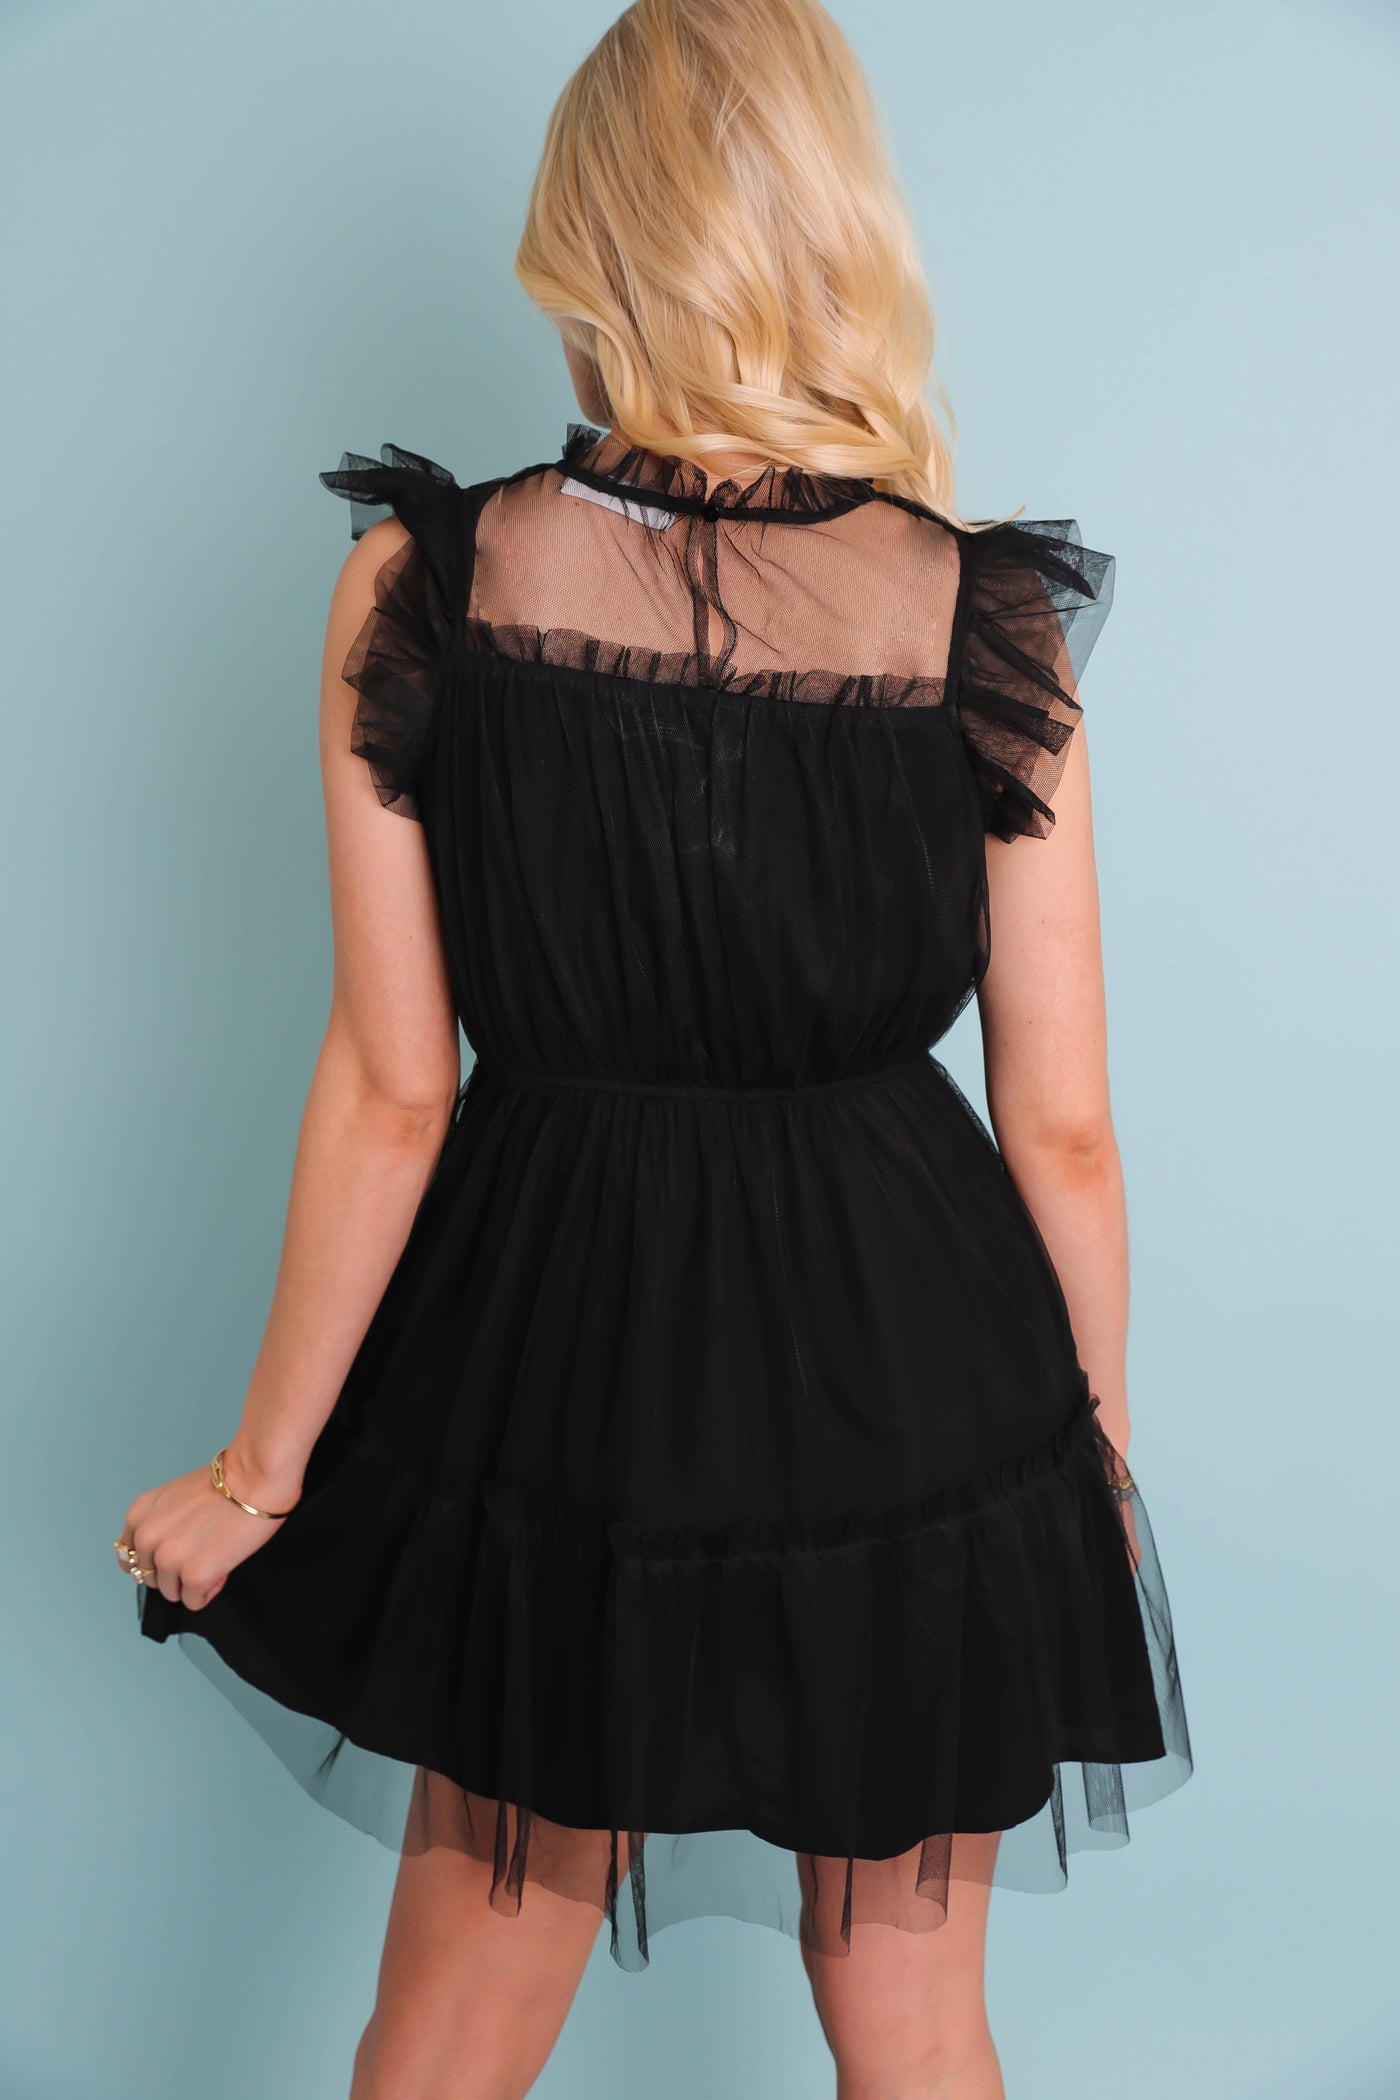 Fun Tulle Dress- Black Tulle Dress- Preppy Women's Dresses- &Merci Dress